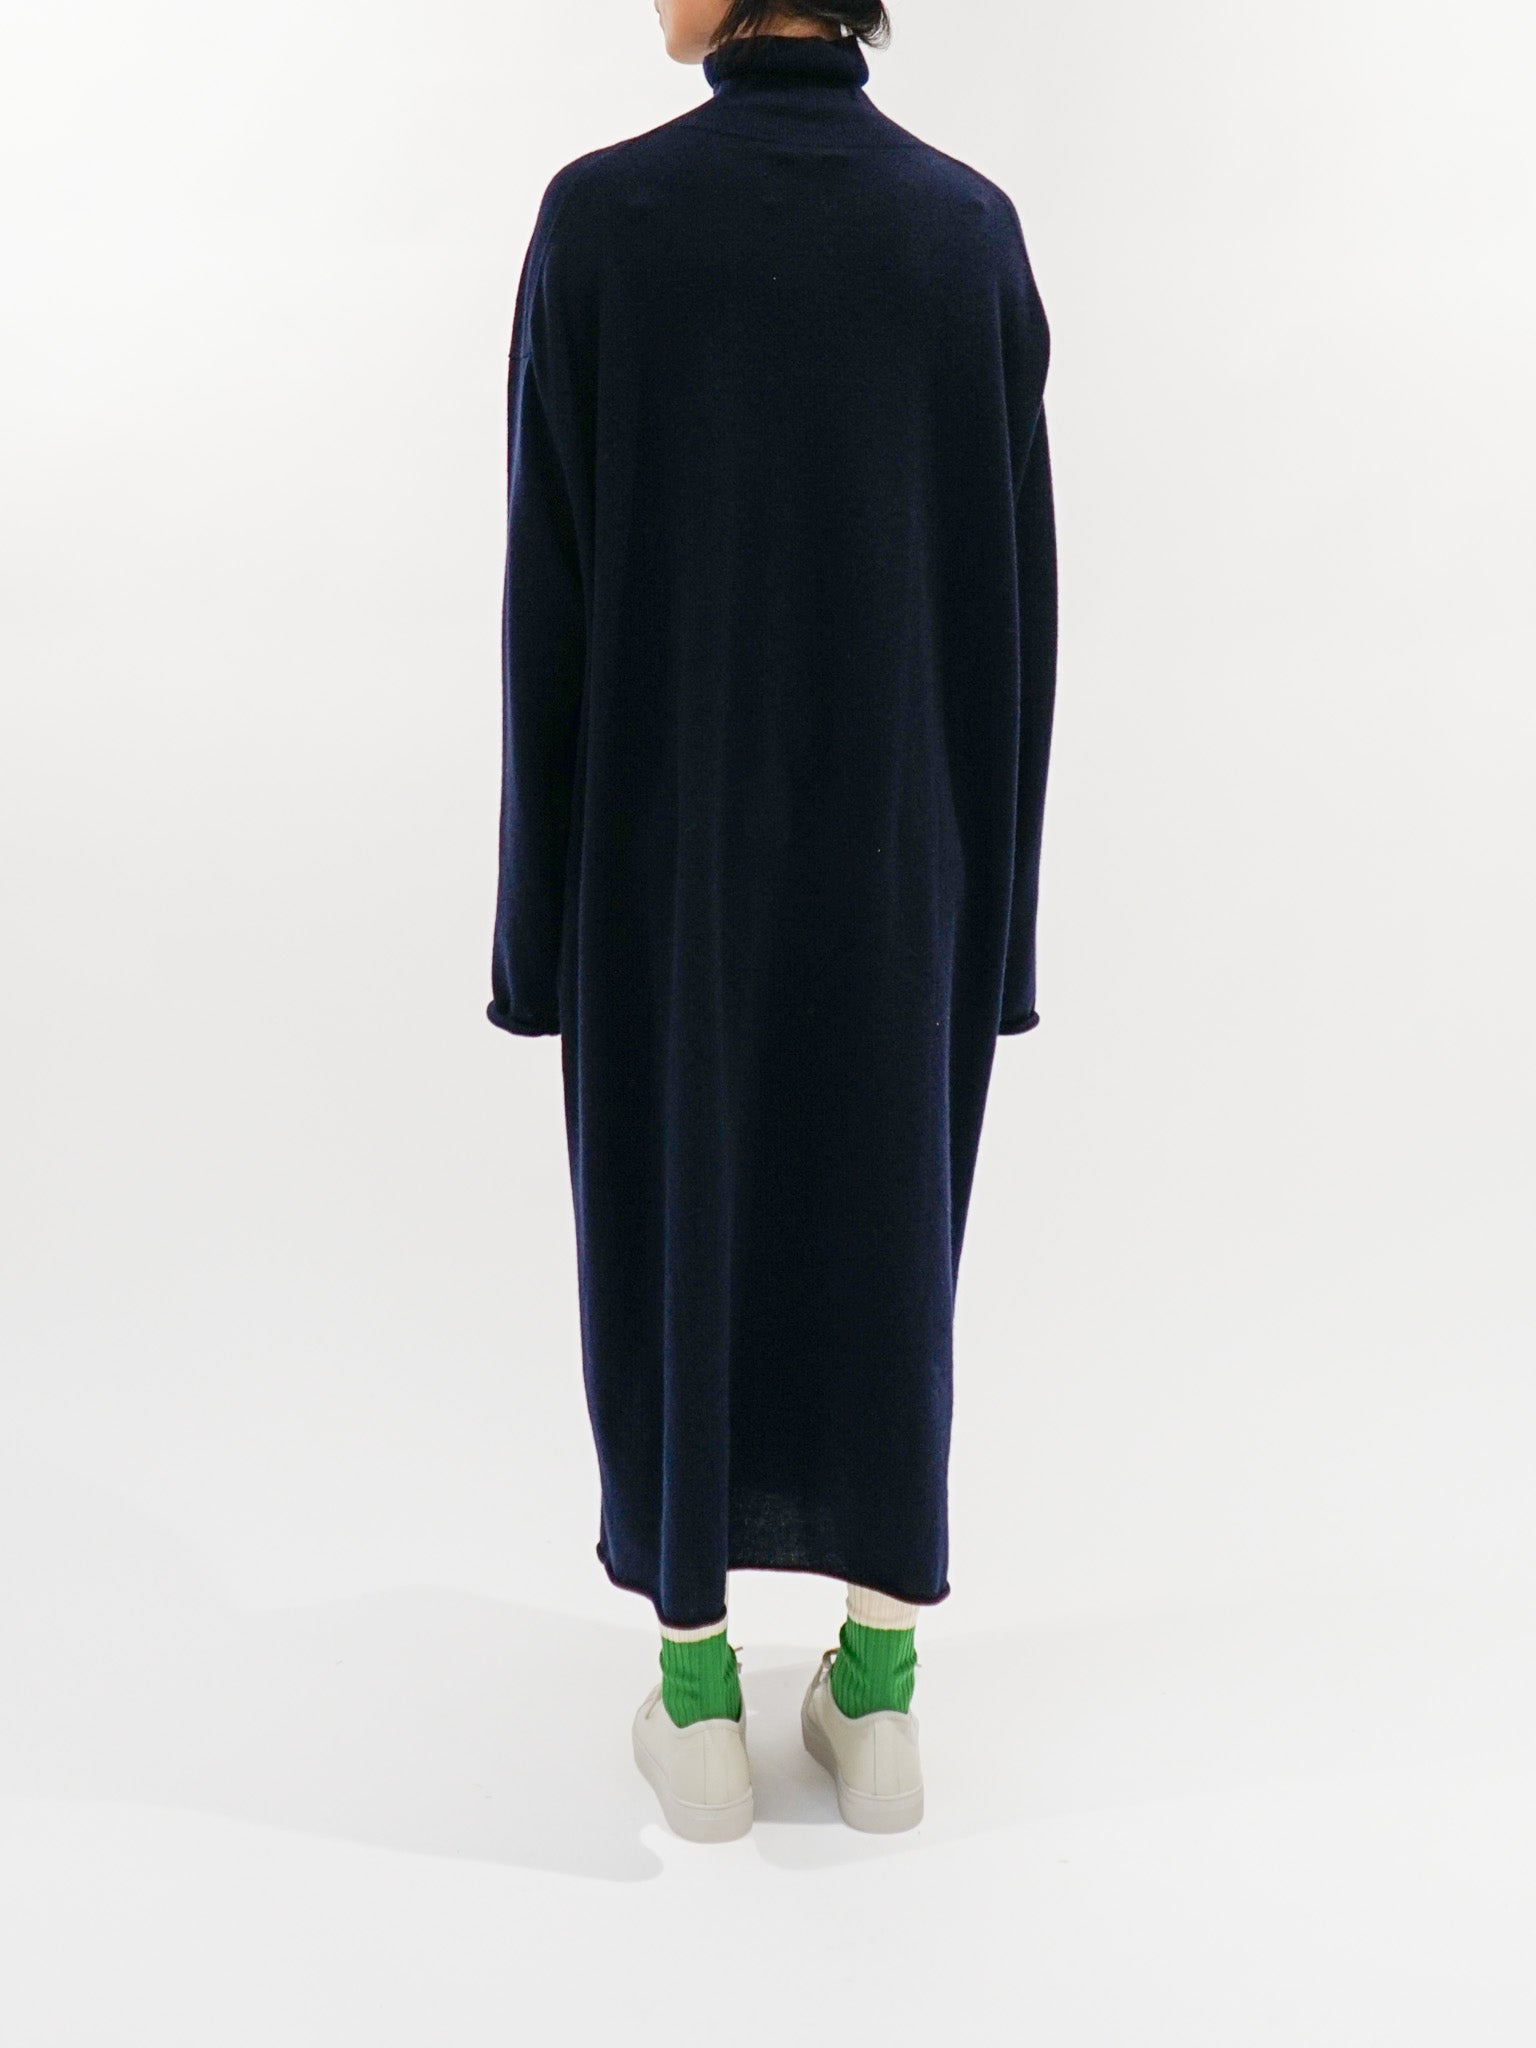 Namu Shop - Sofie D'Hoore Mascara Knit Dress - Midnight